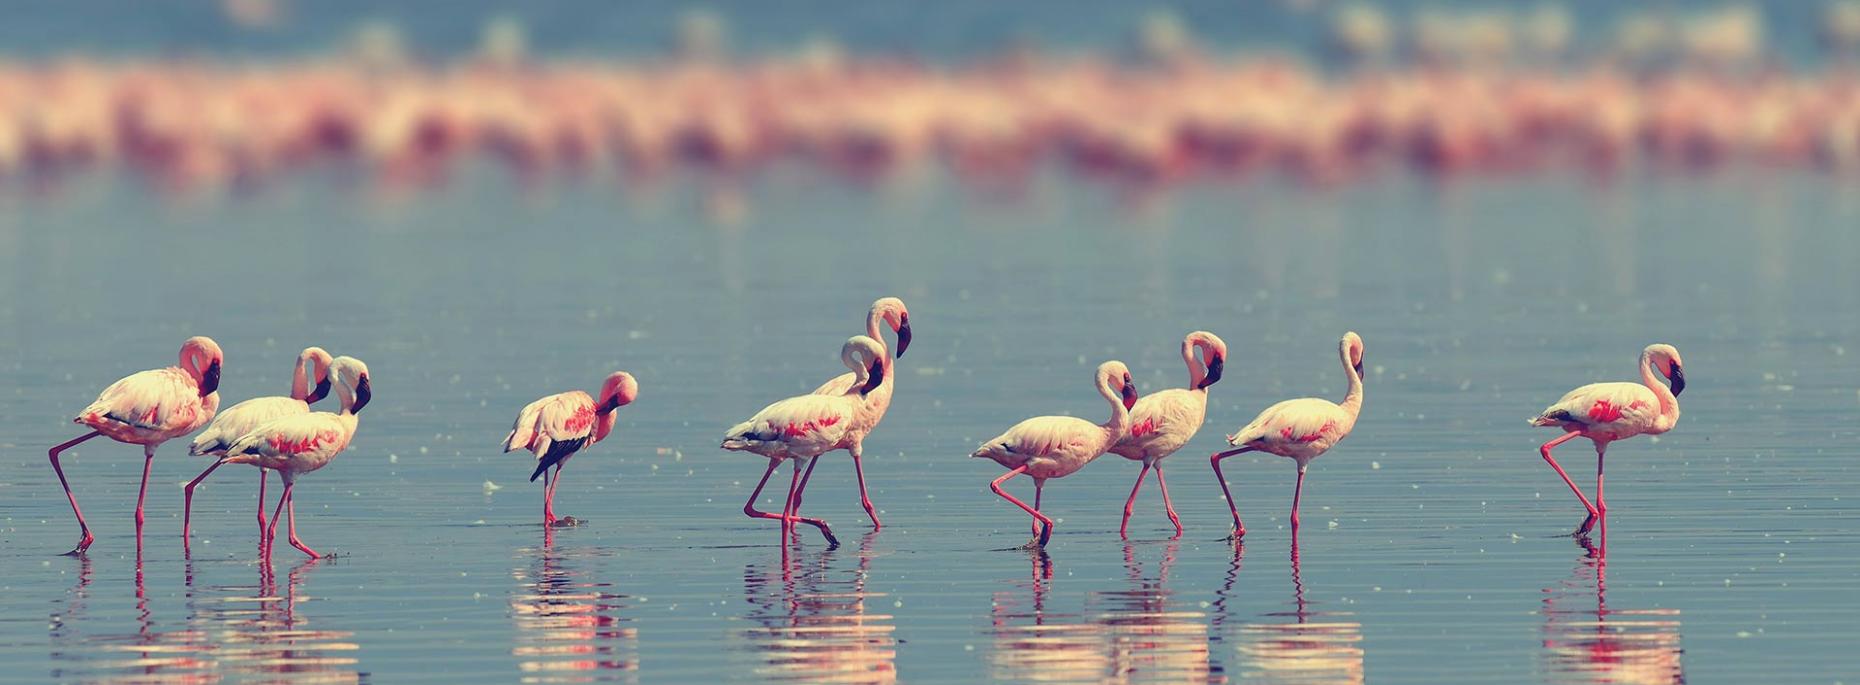 aironebiancoresidencevillage de fenster-der-flamingos 004